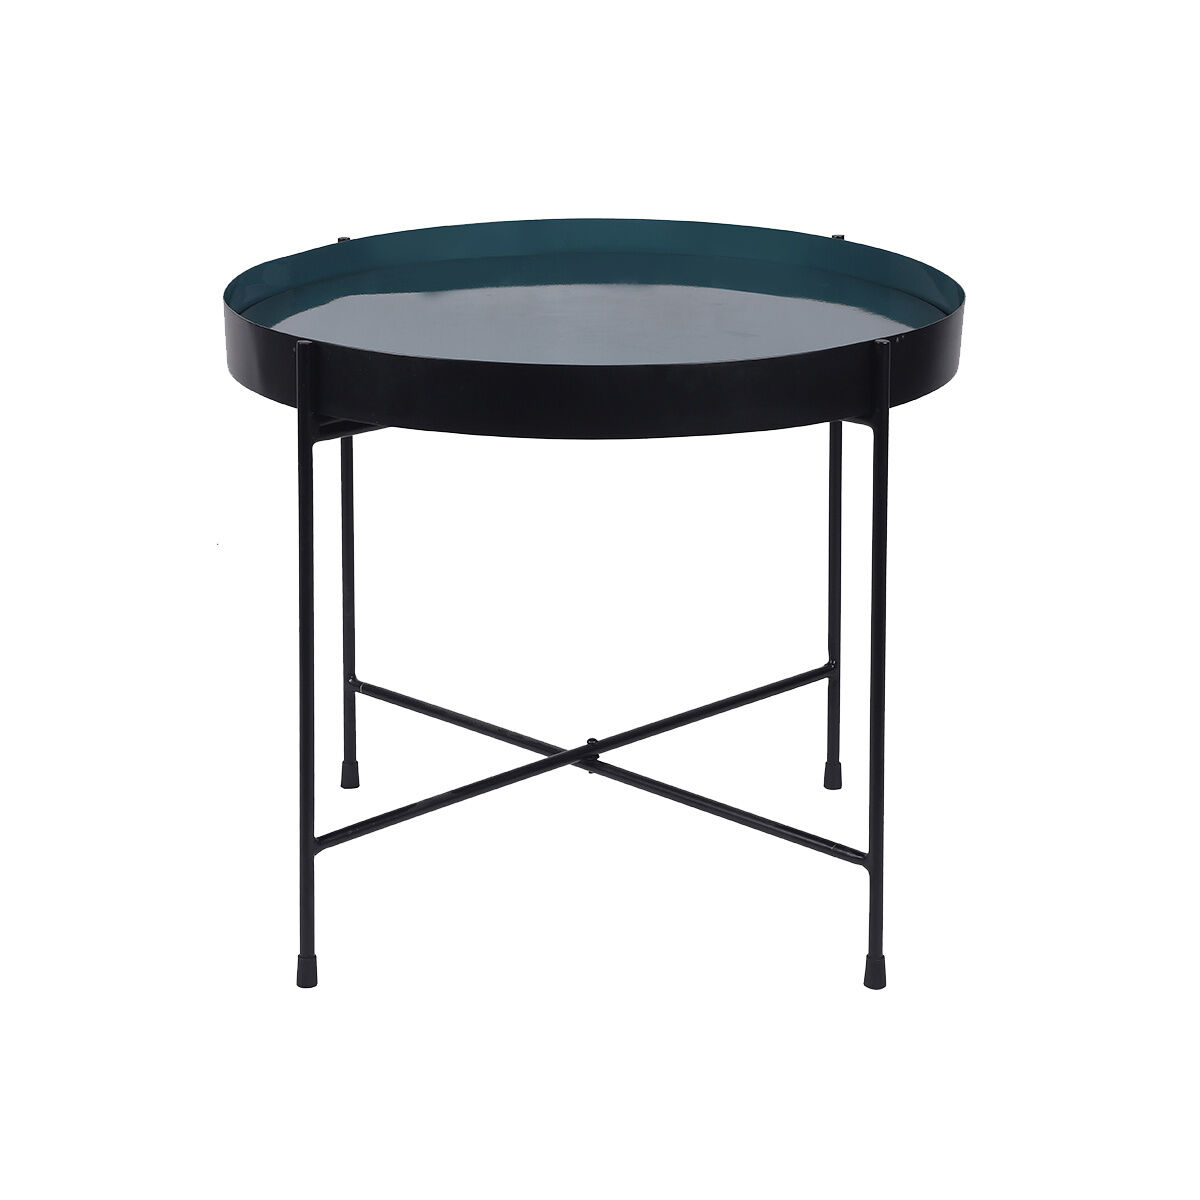 Miliboo Table basse ronde avec plateau réversible bleu canard / noir SATEEN - Miliboo & Stéphane Plaza